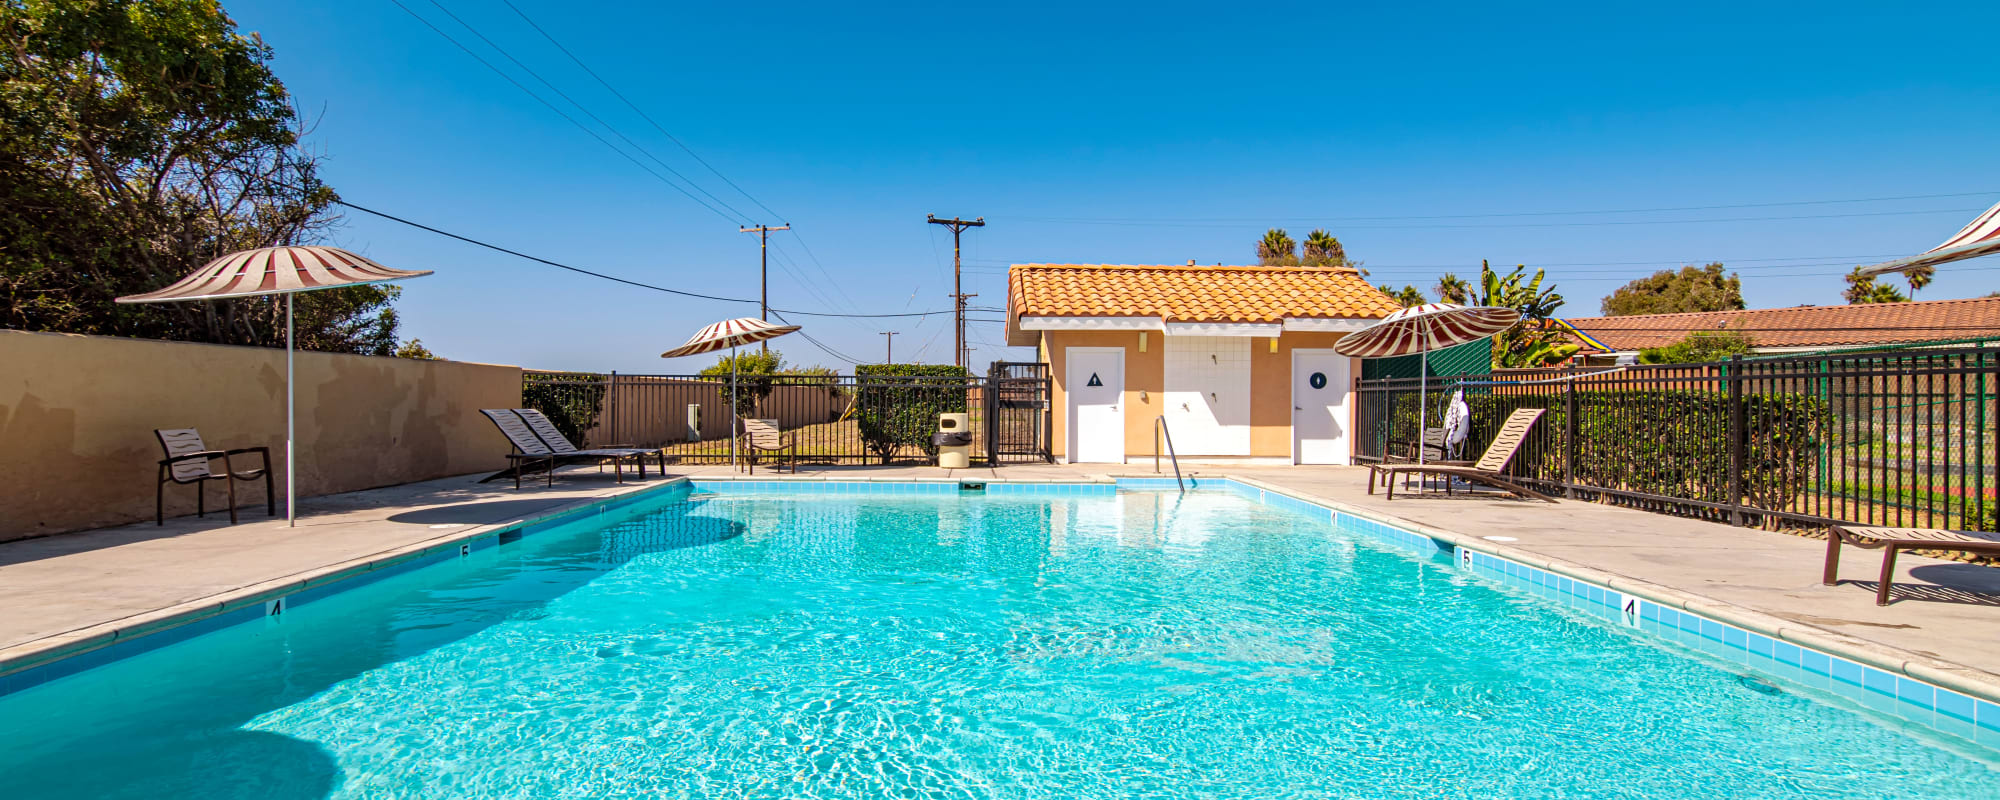 A swimming pool at Silver Strand II in Coronado, California